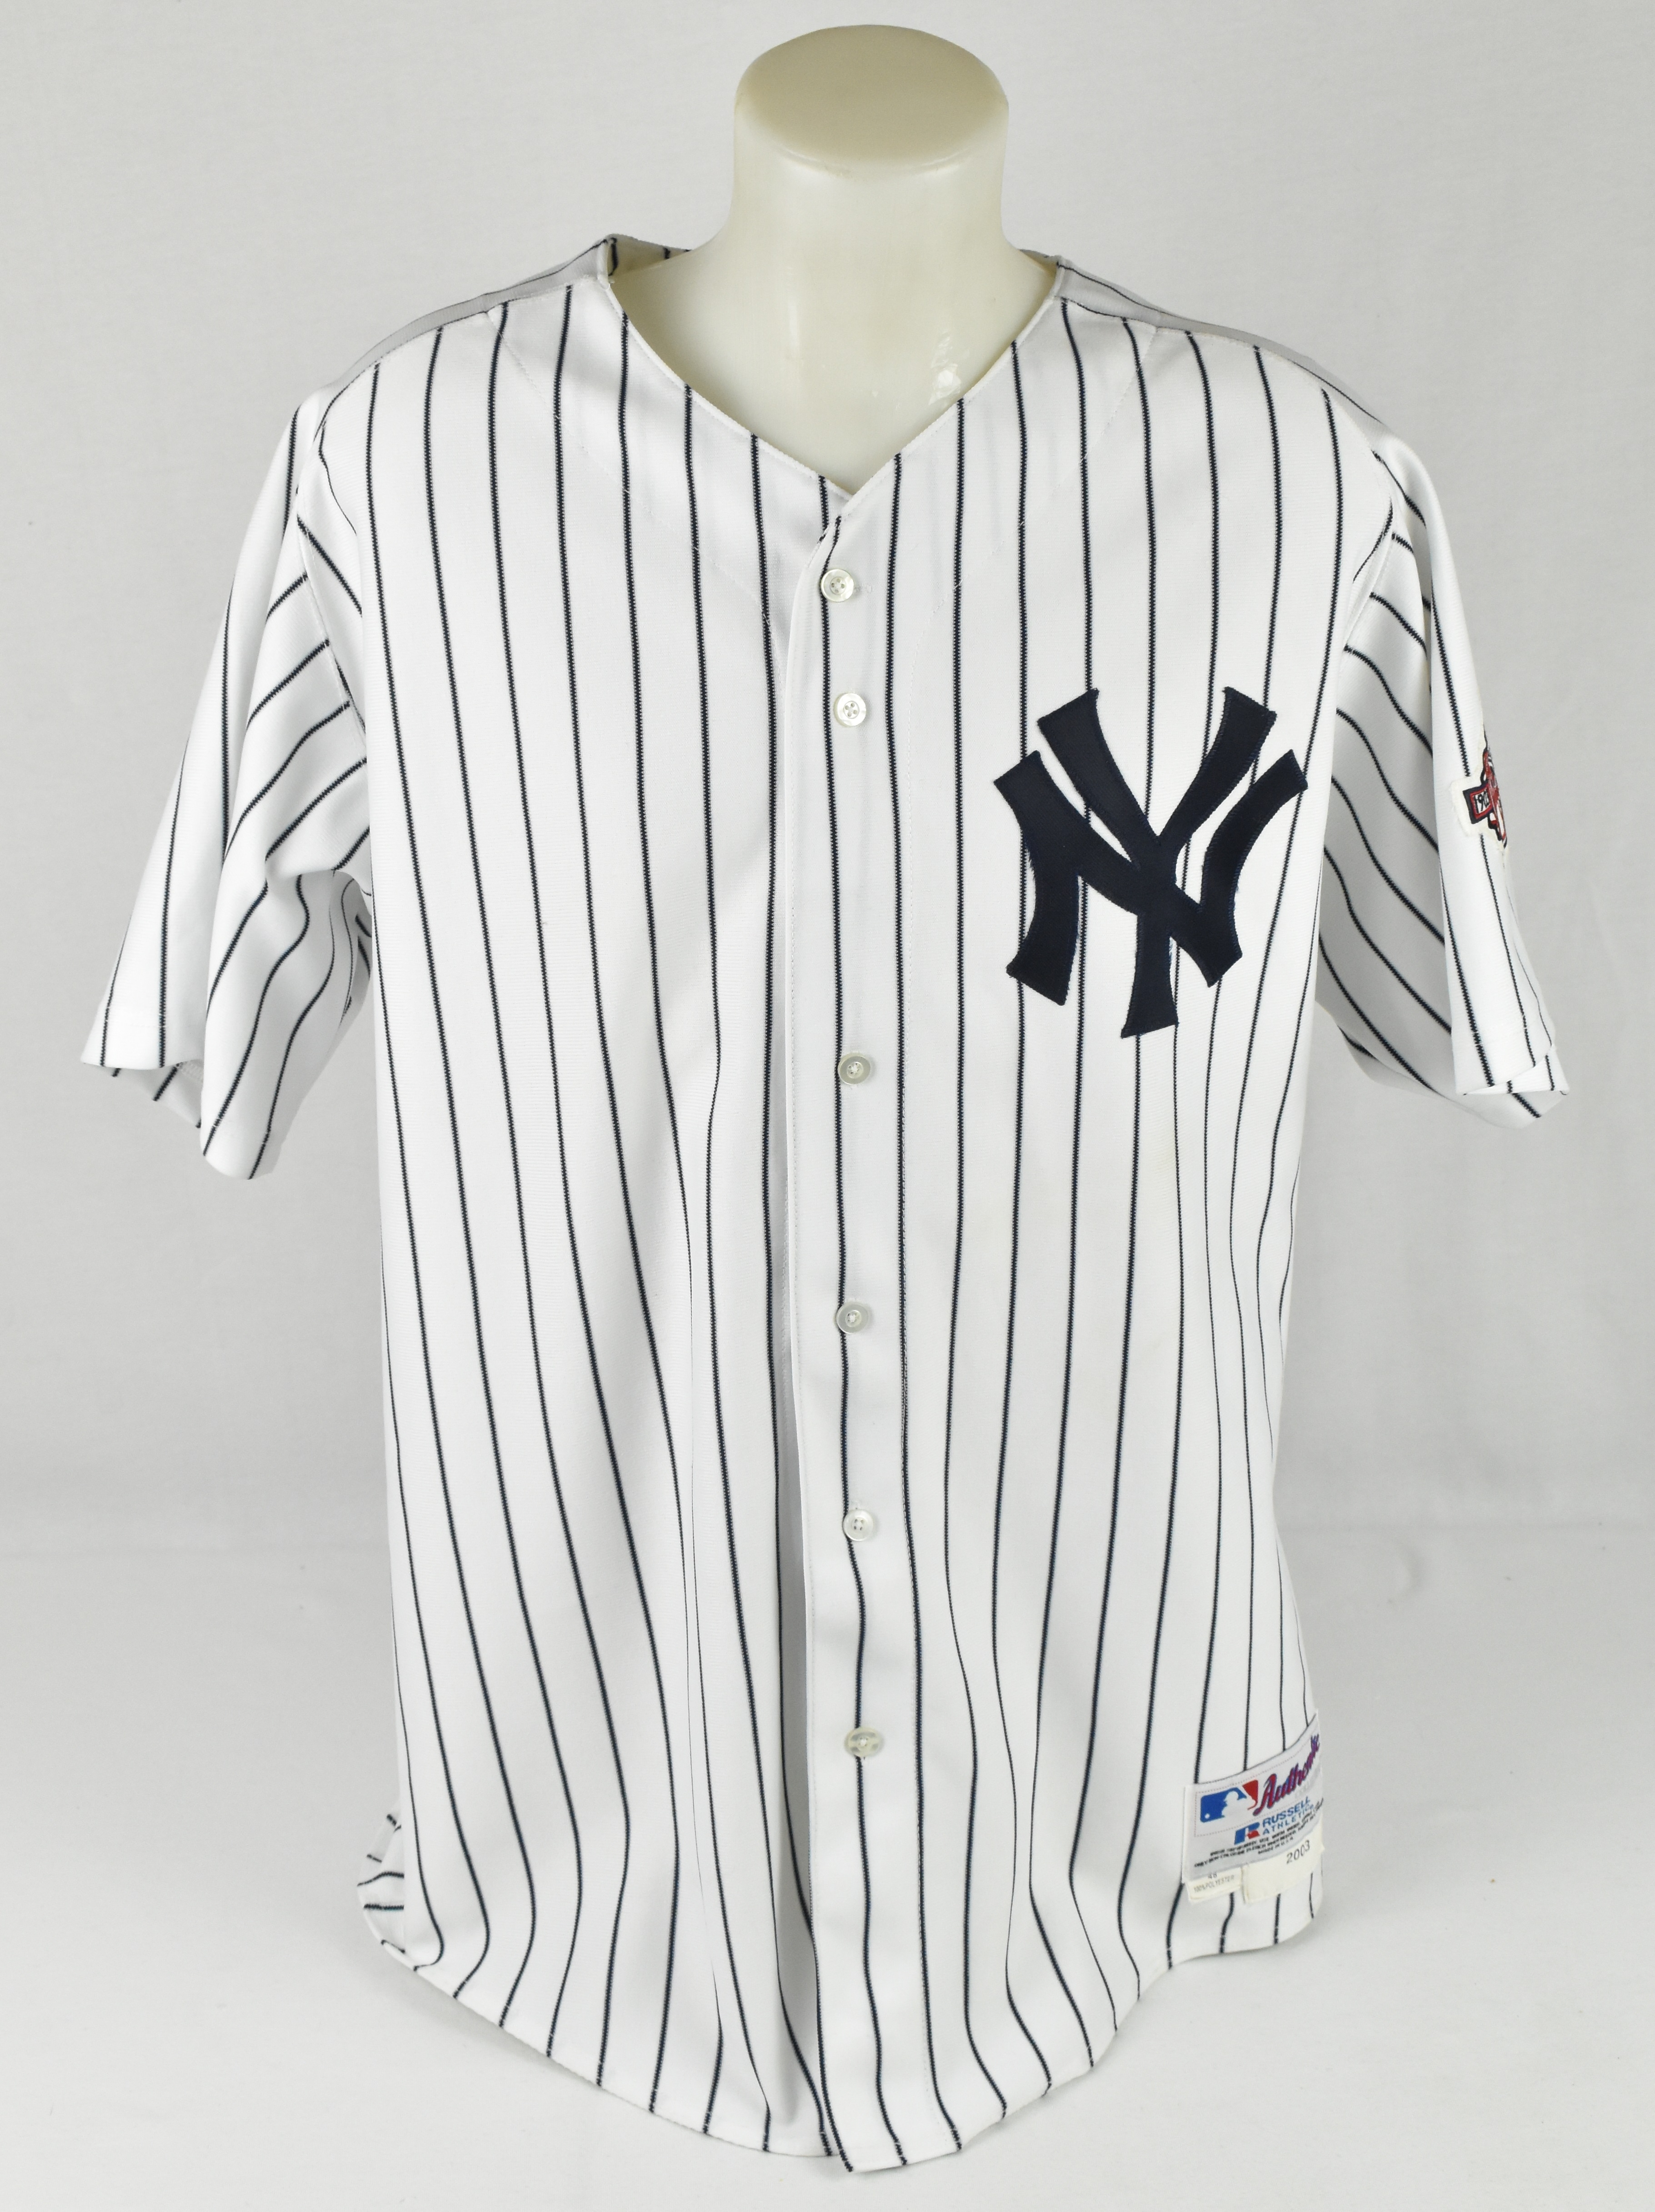 Derek Jeter #2 New York Yankees Authentic Jersey W/ 2003 100th Anniversary  Patch